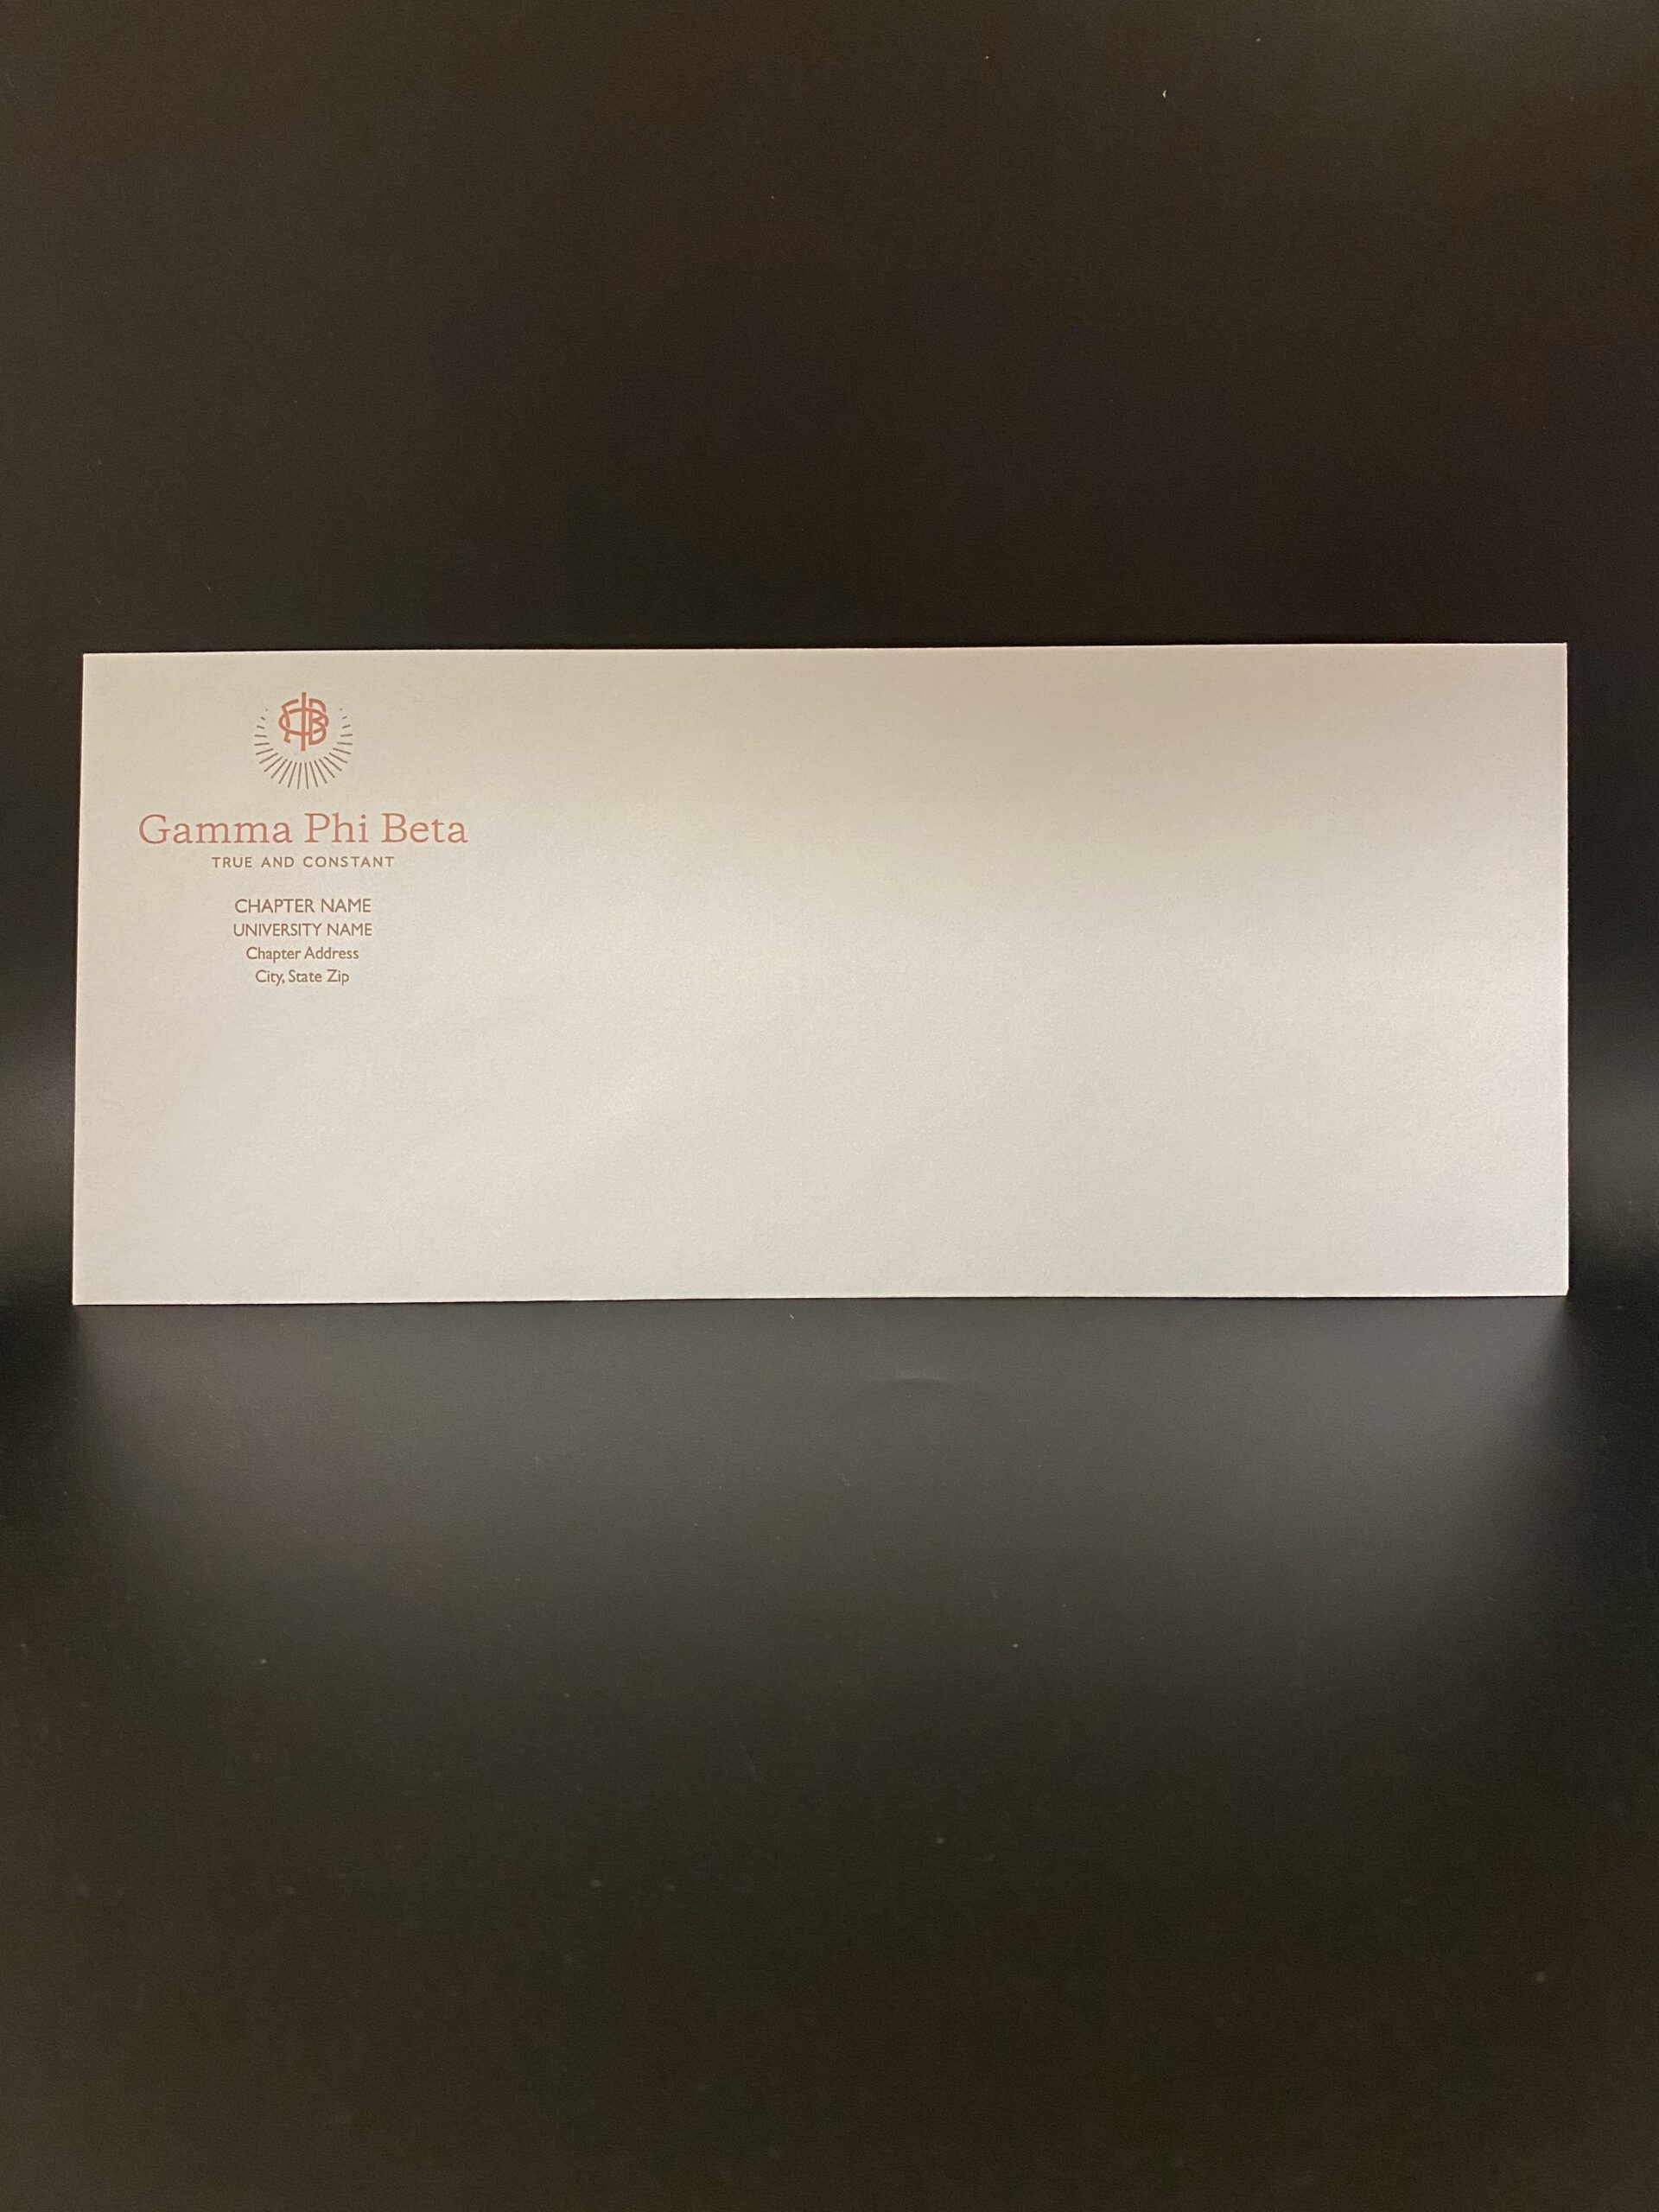 Official Business Envelopes Gamma Phi Beta